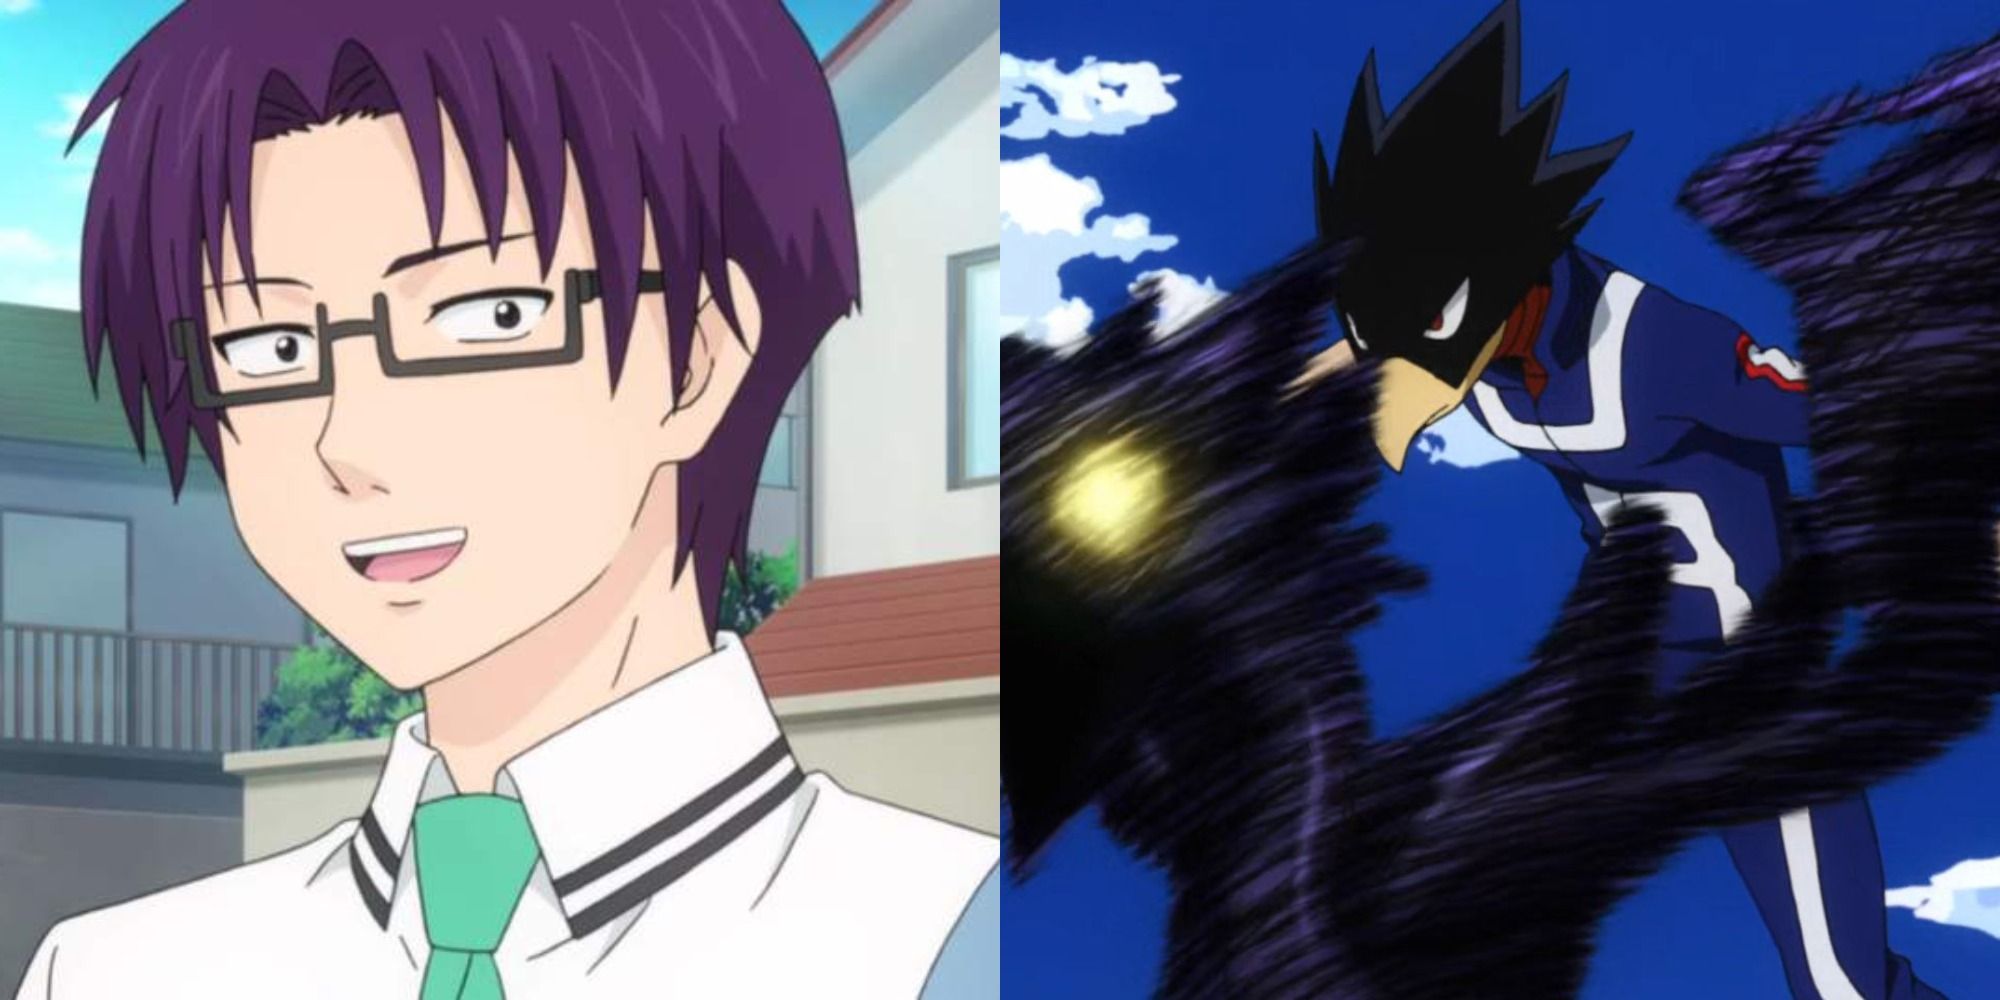 KonoSuba Voice Actors & Same Voice in Anime Characters Roles